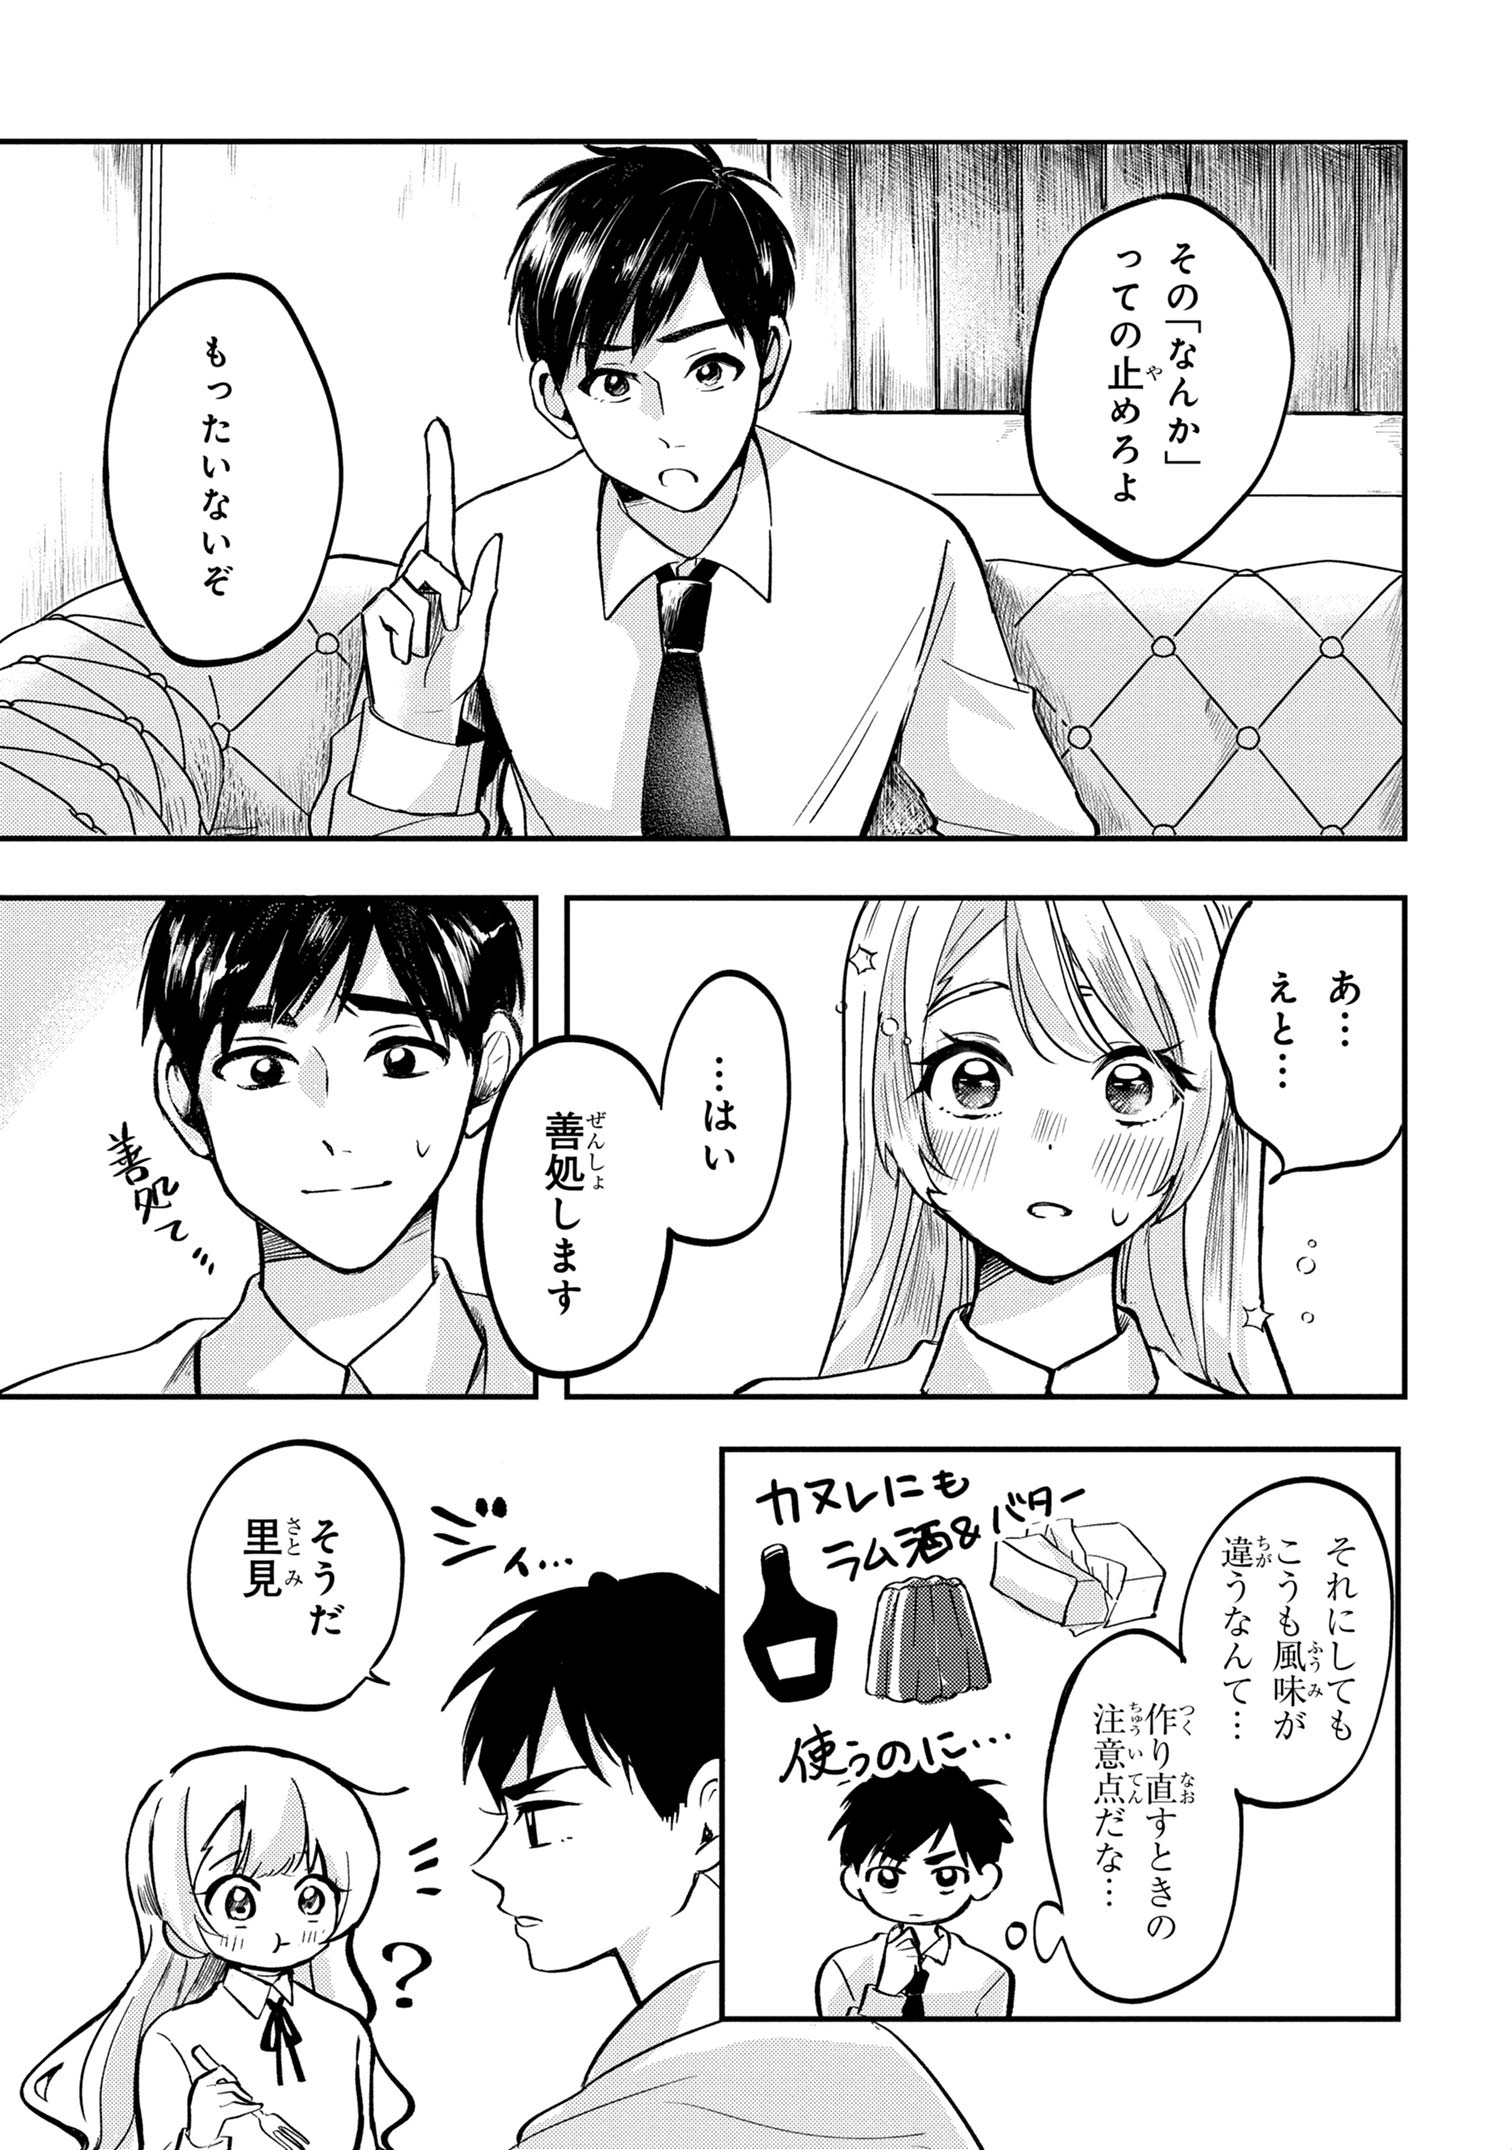 Aisare Tenshi na Classmate ga, Ore ni Dake Itazura ni Hohoemu - Chapter 1 - Page 28